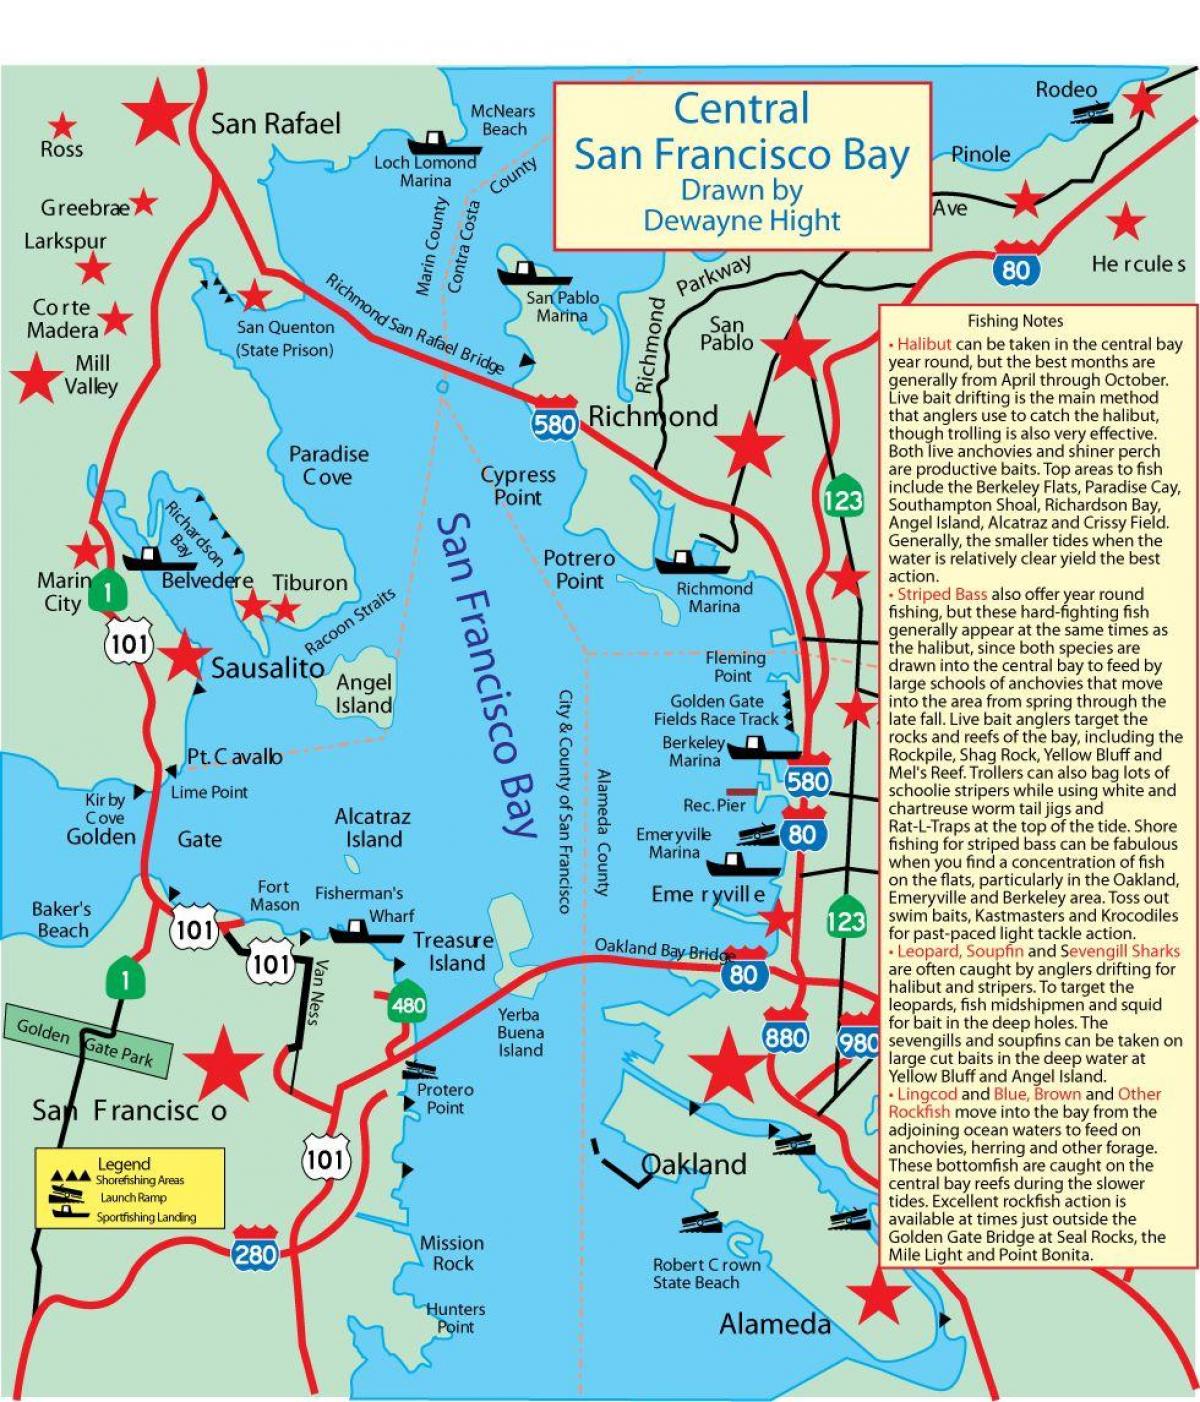 Peta dari San Francisco bay memancing 